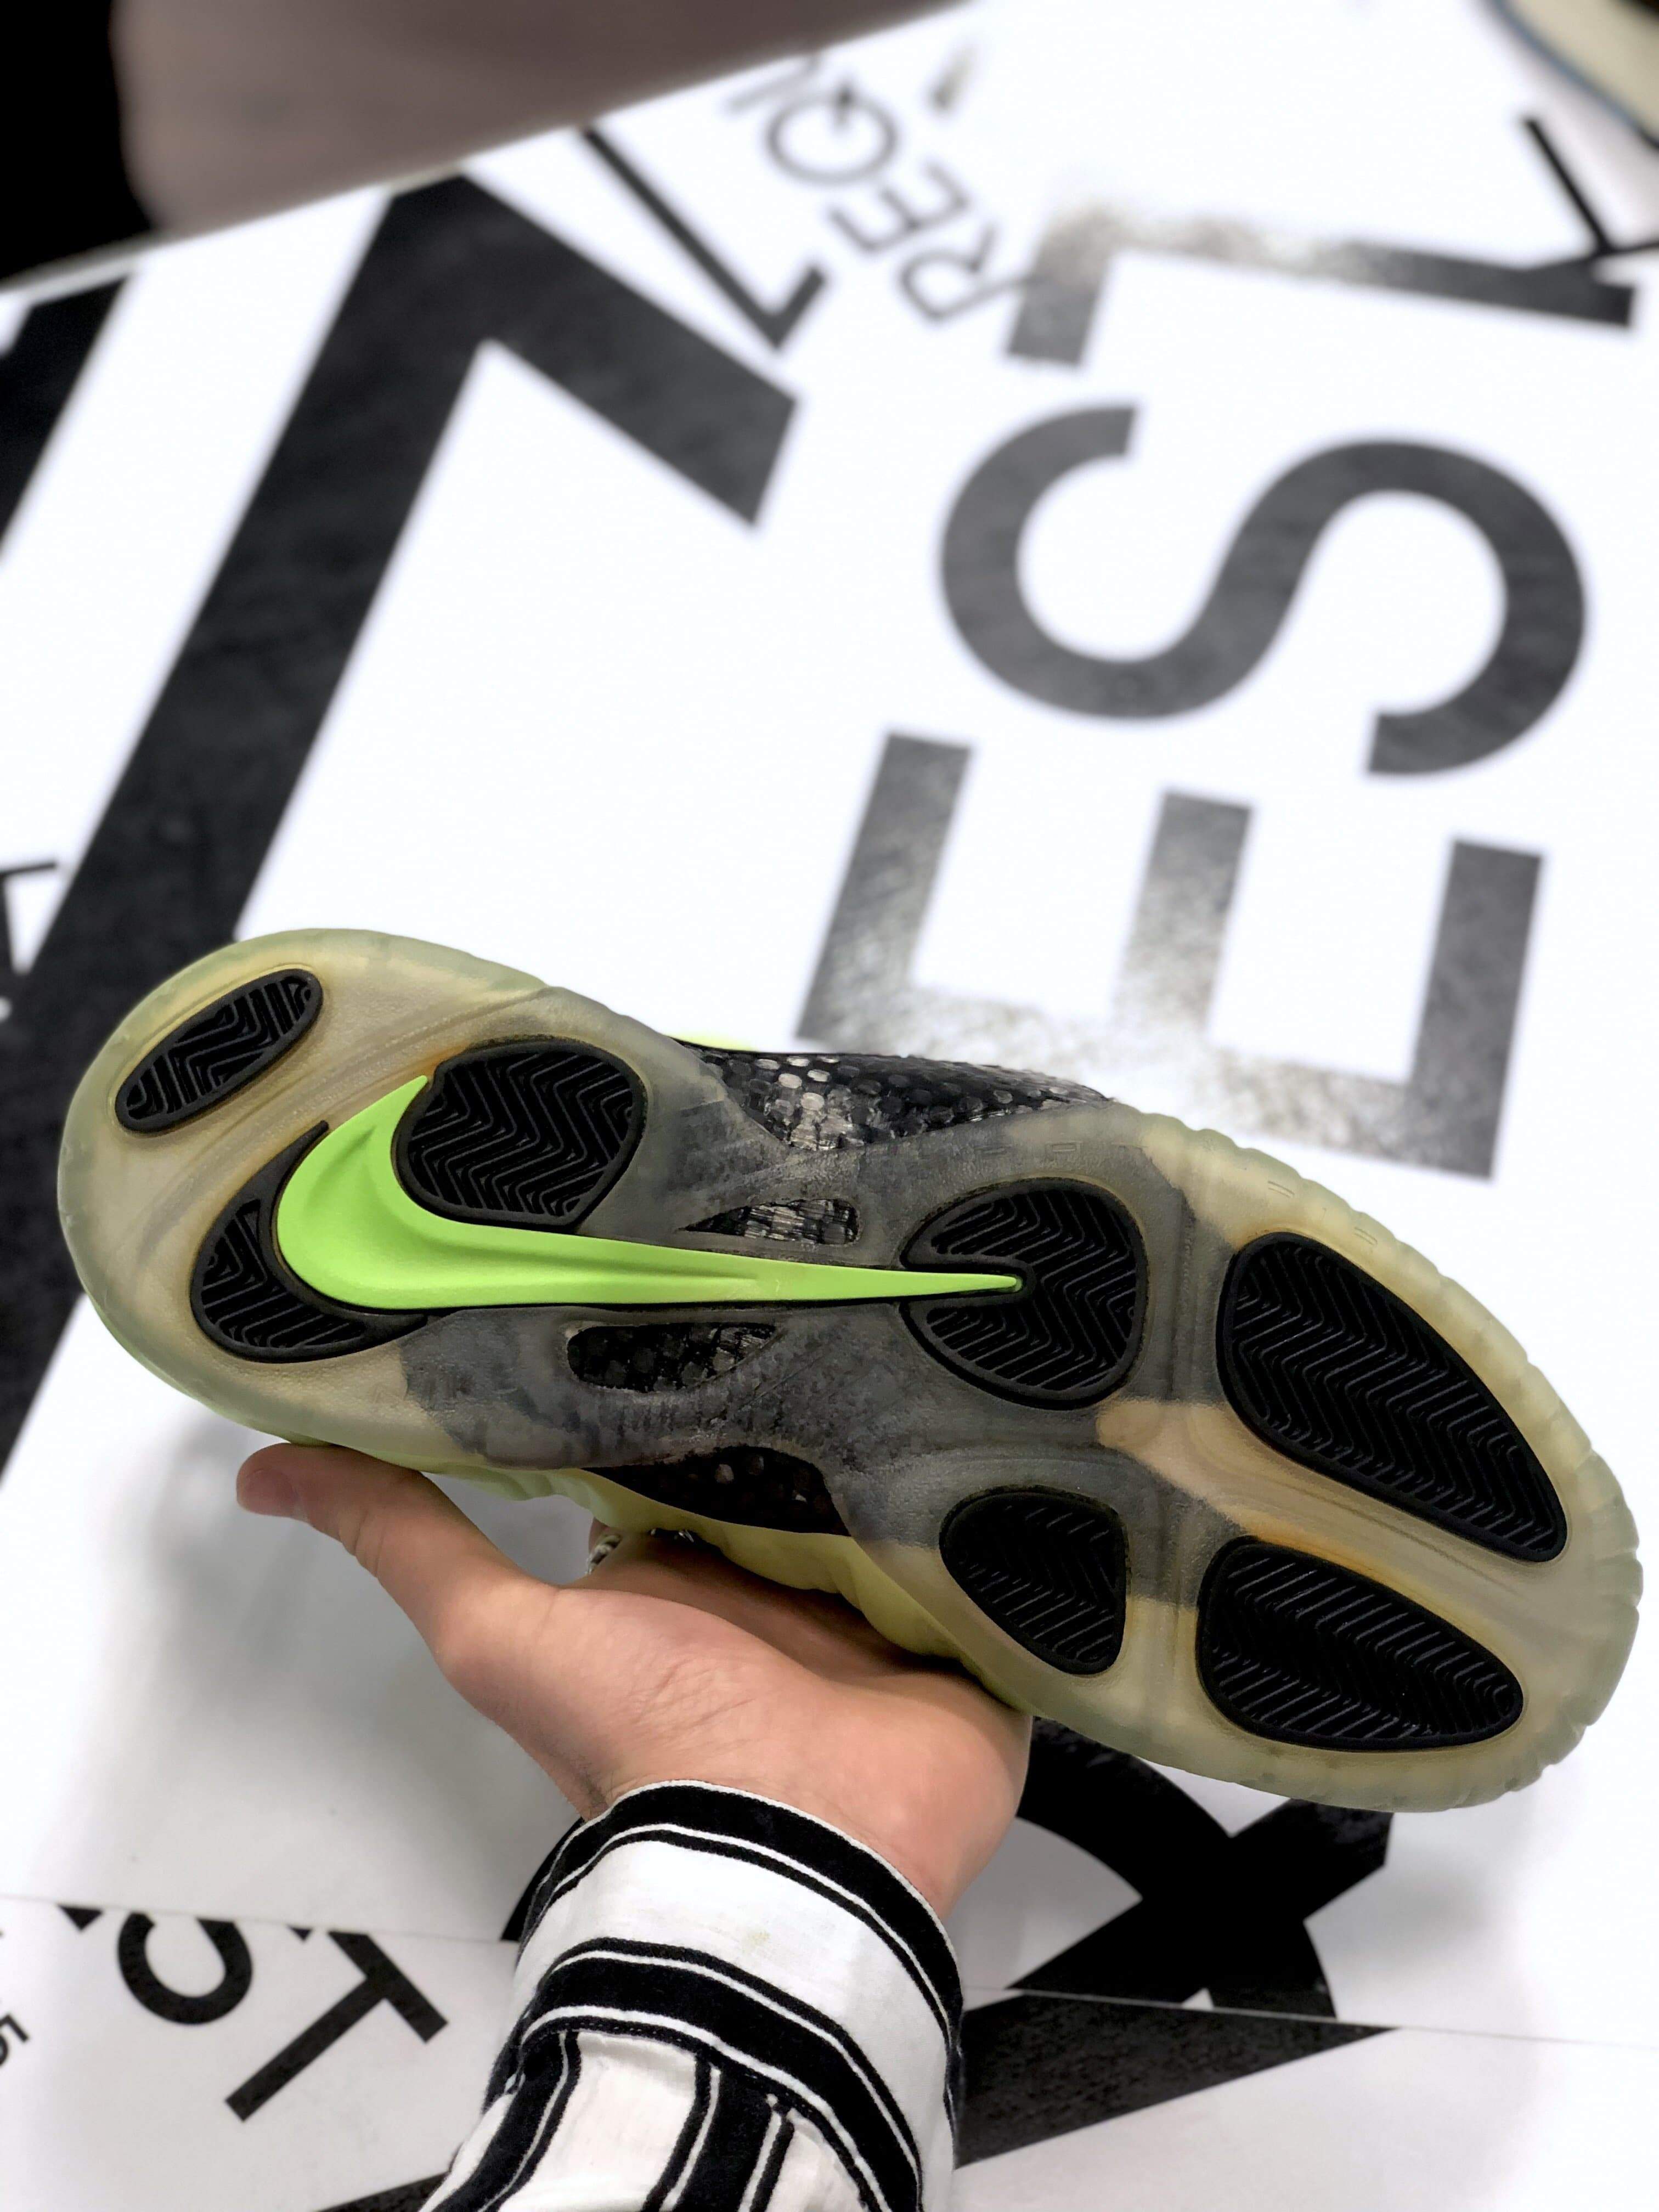 Nike Air Foamposite Pro 'Electric Green